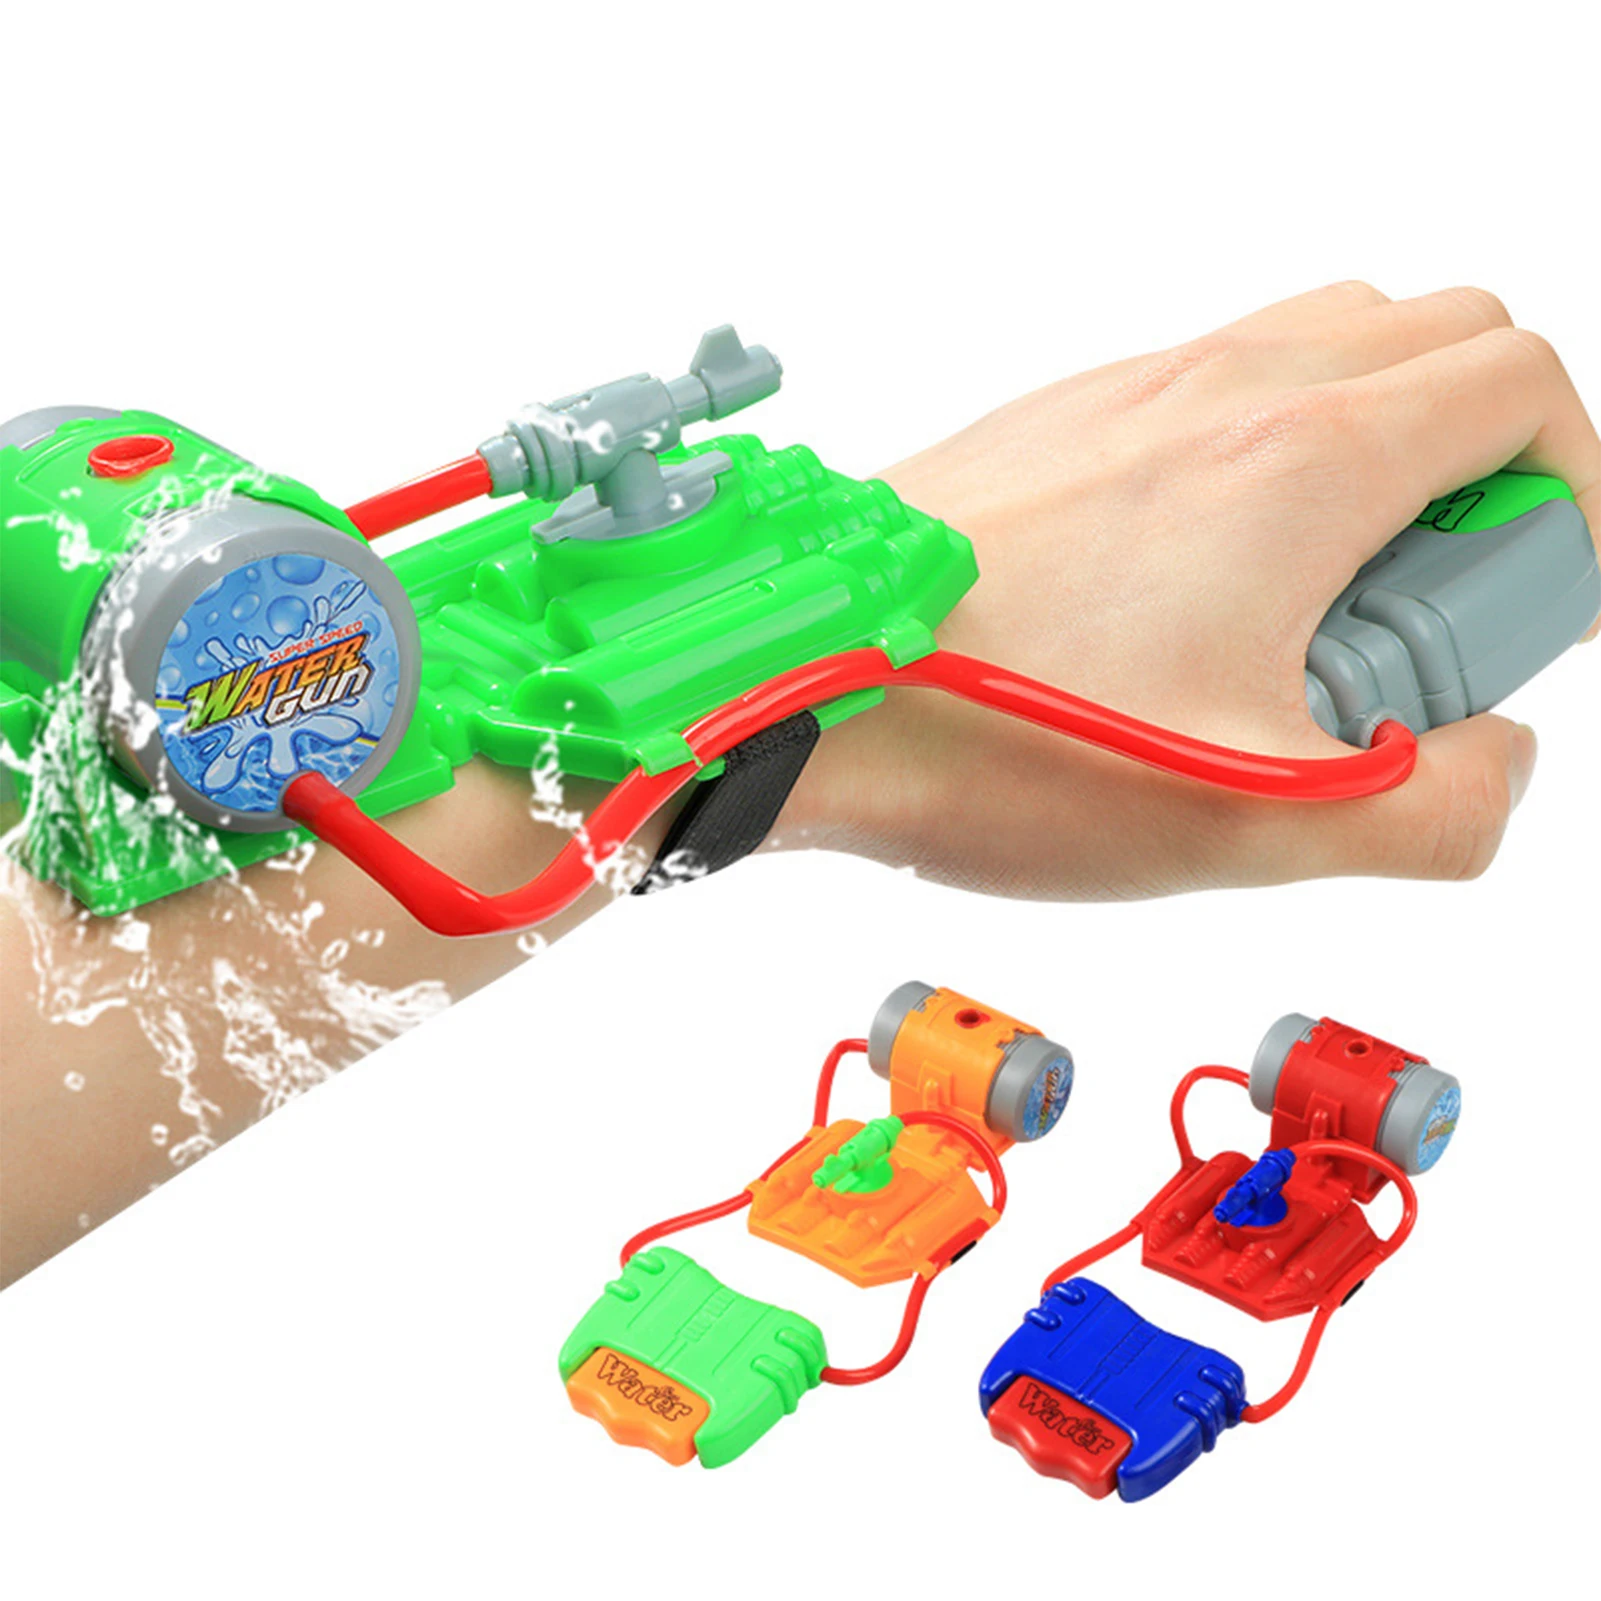 

Water Gun Toys Fun Spray Wrist Hand-held Children's Outdoor Beach Play Water Toy For Boys Sports Summer Pistol Gun Weapons Gifts